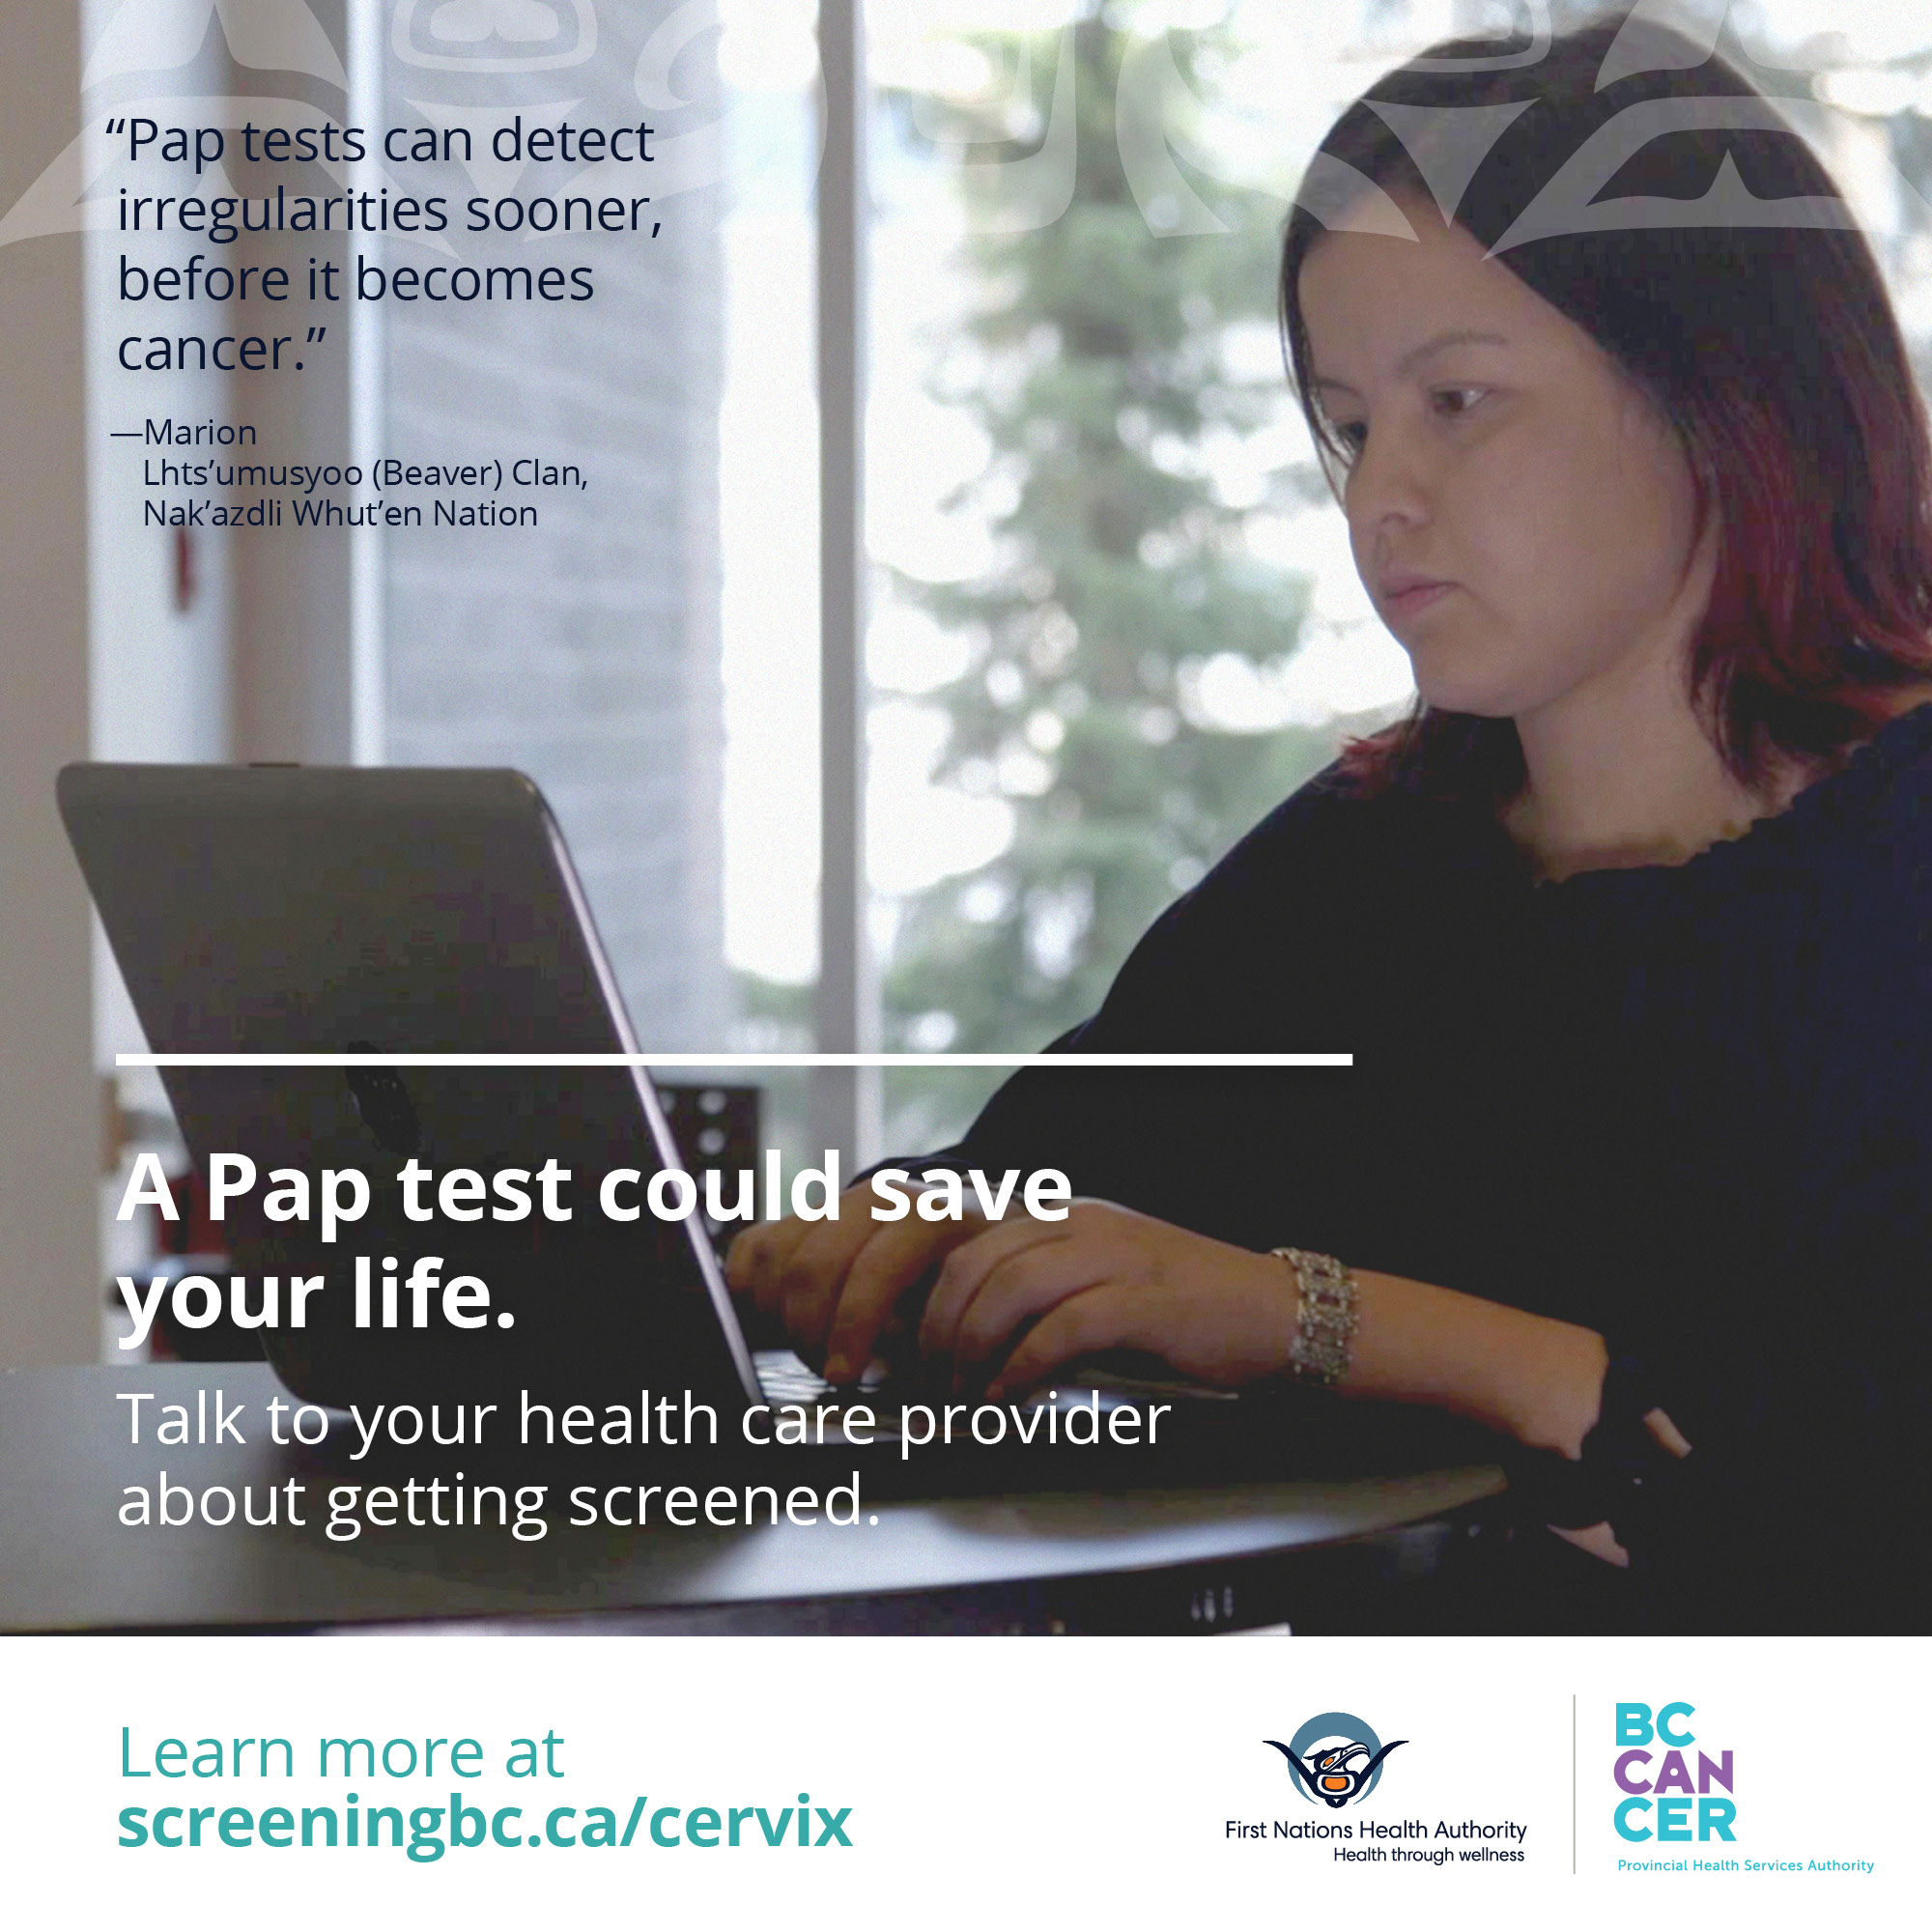 FNHA-BC-Cancer-Cervical-Cancer-Screening-Postcard-2.JPG